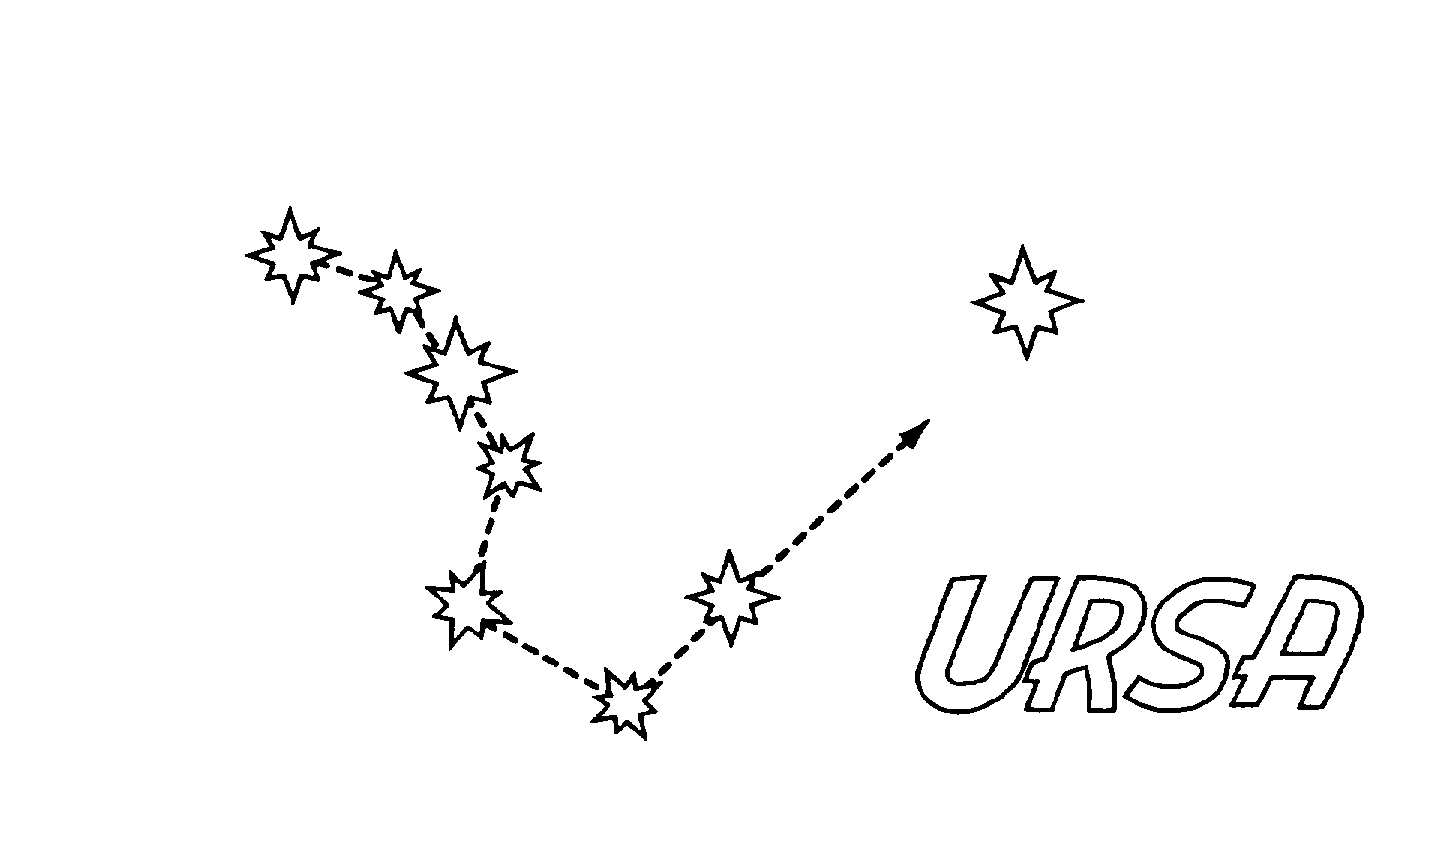 Trademark Logo URSA